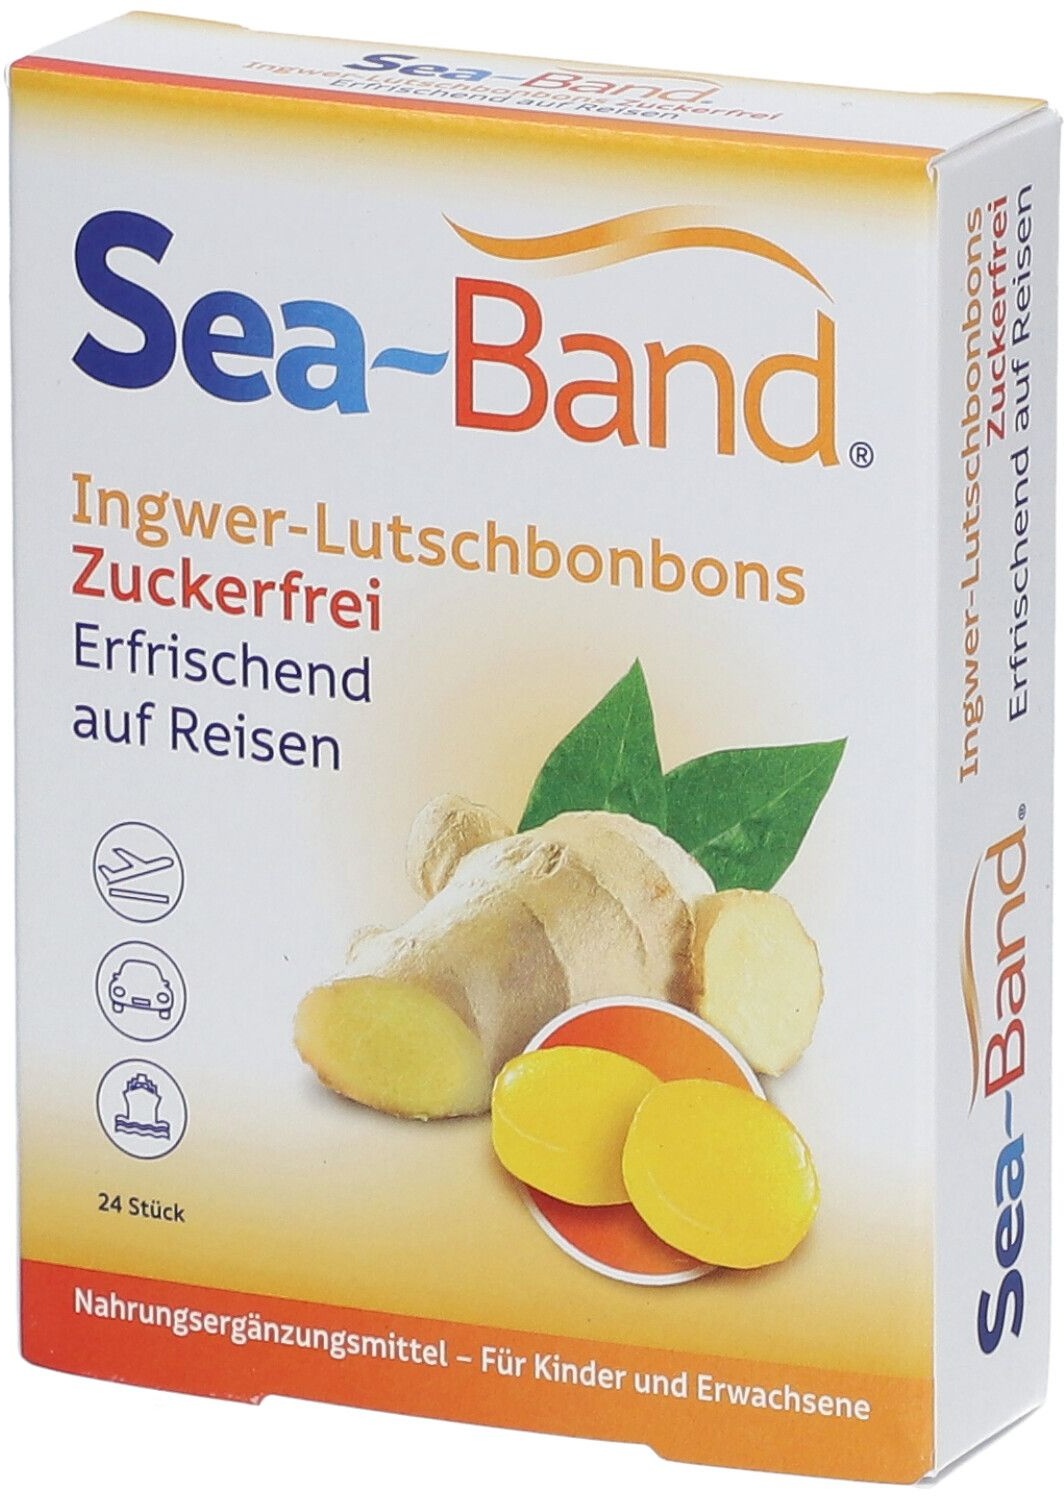 SEA Band® Ingwer-Lutschbonbons